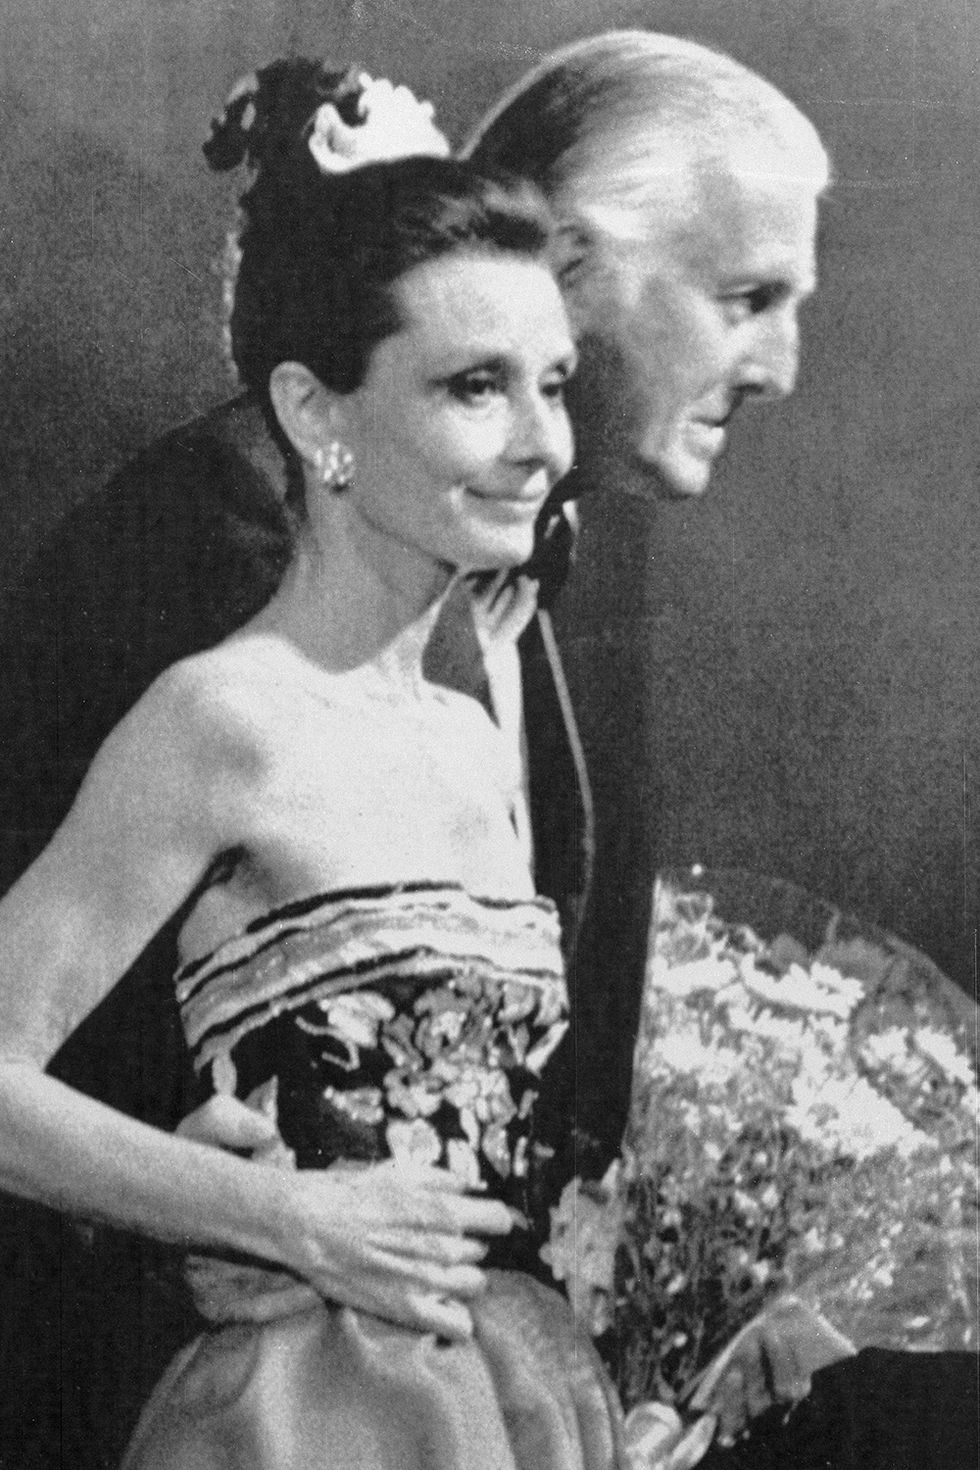 Audrey Hepburn And Hubert De Givenchy: Best Film Costumes And